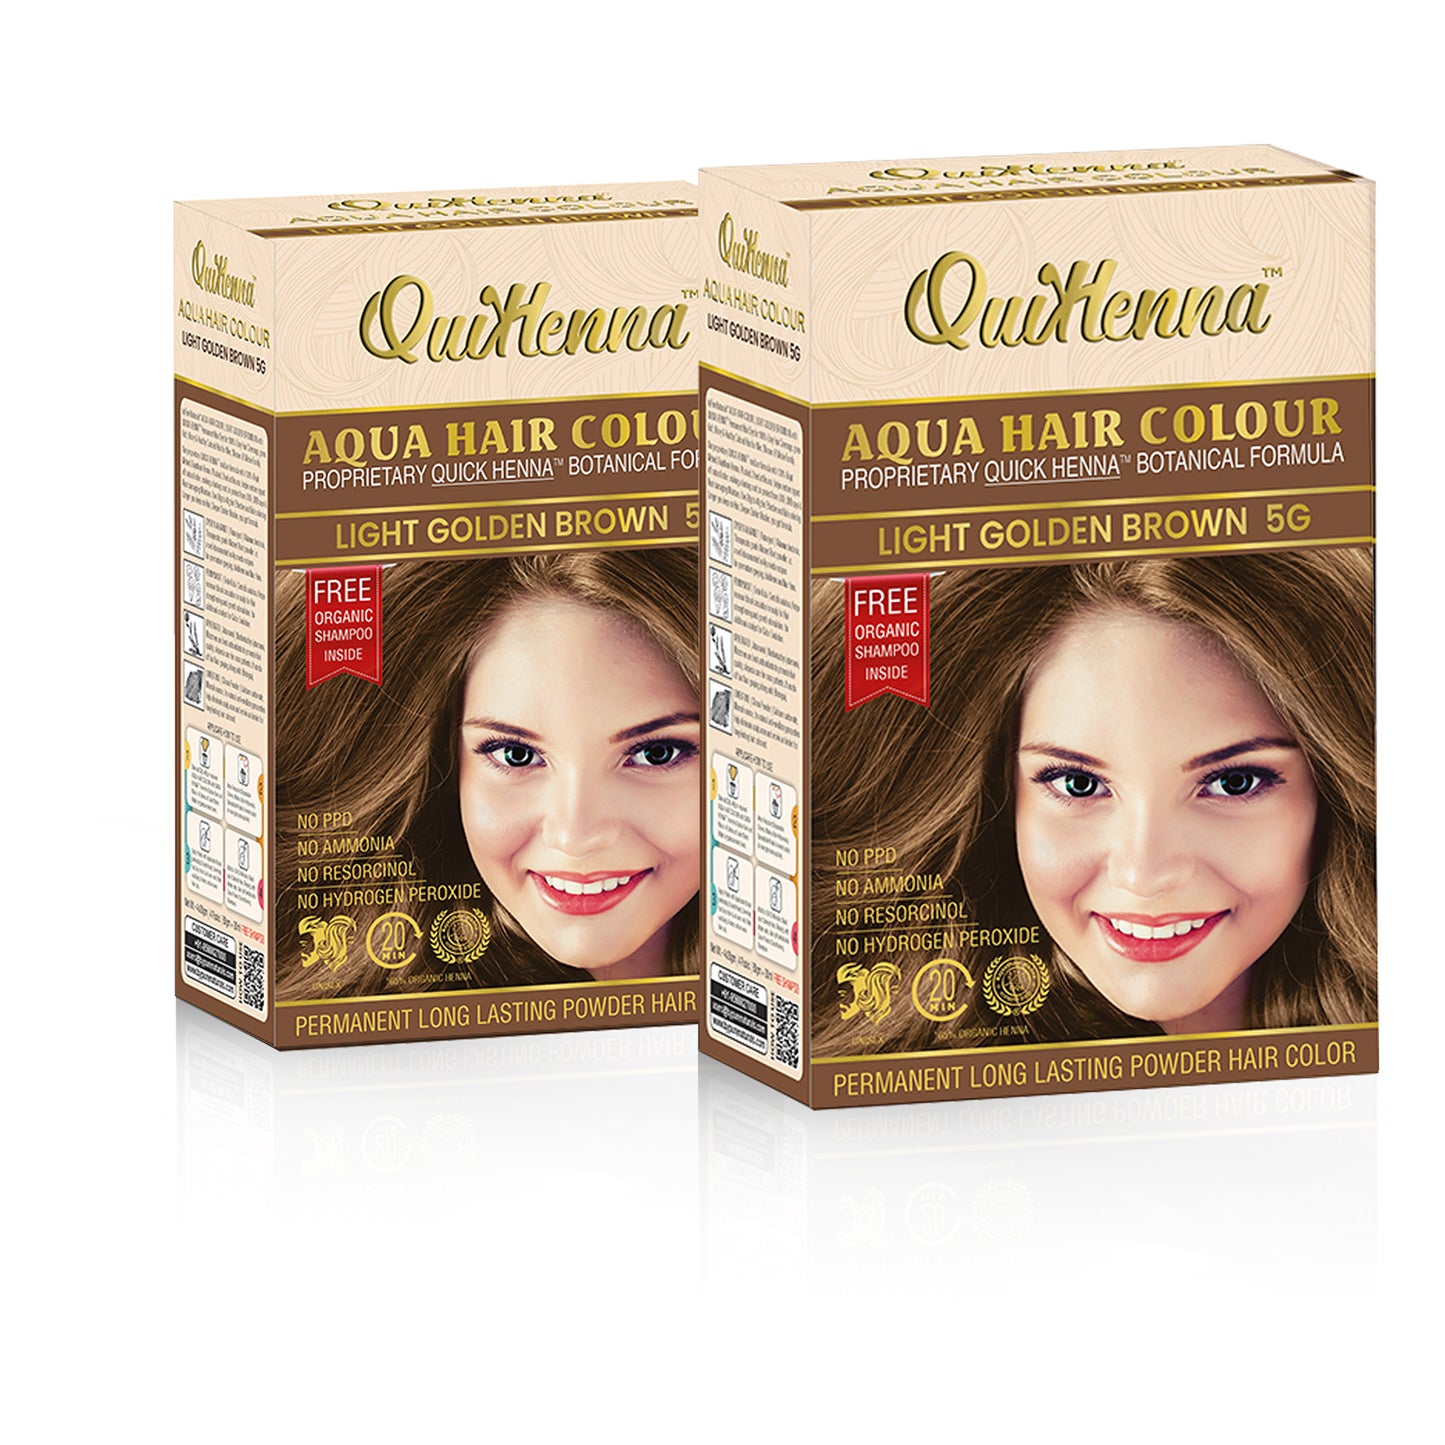 QuikHenna Aqua Safe Powder Hair Colour light brown 